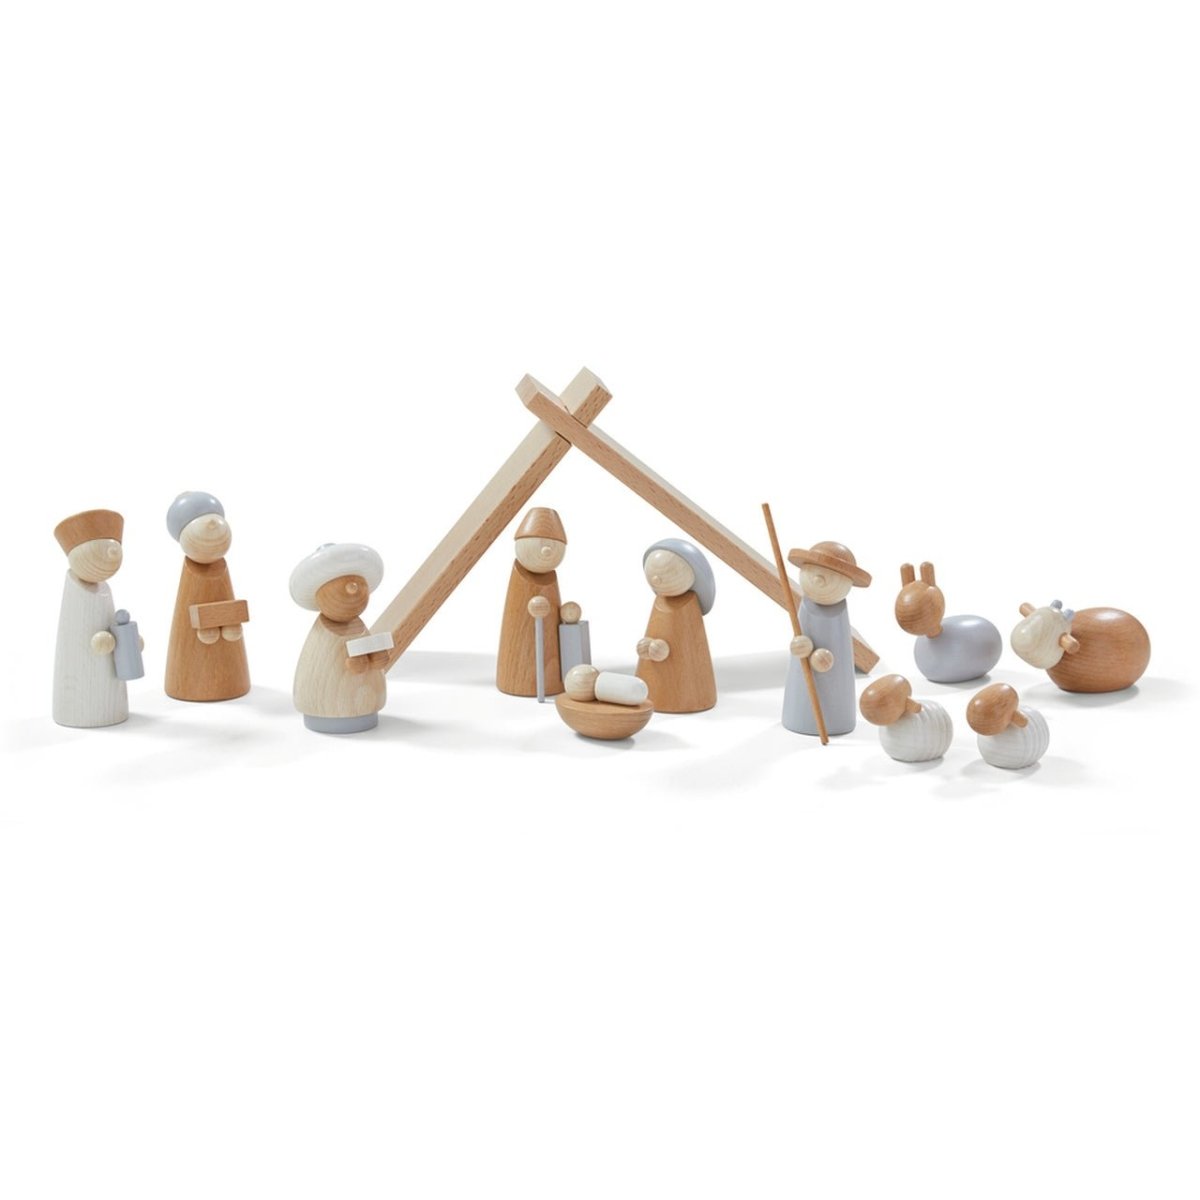 HABA Wooden Nativity Set - Challenge & Fun, Inc.-HB304685-2